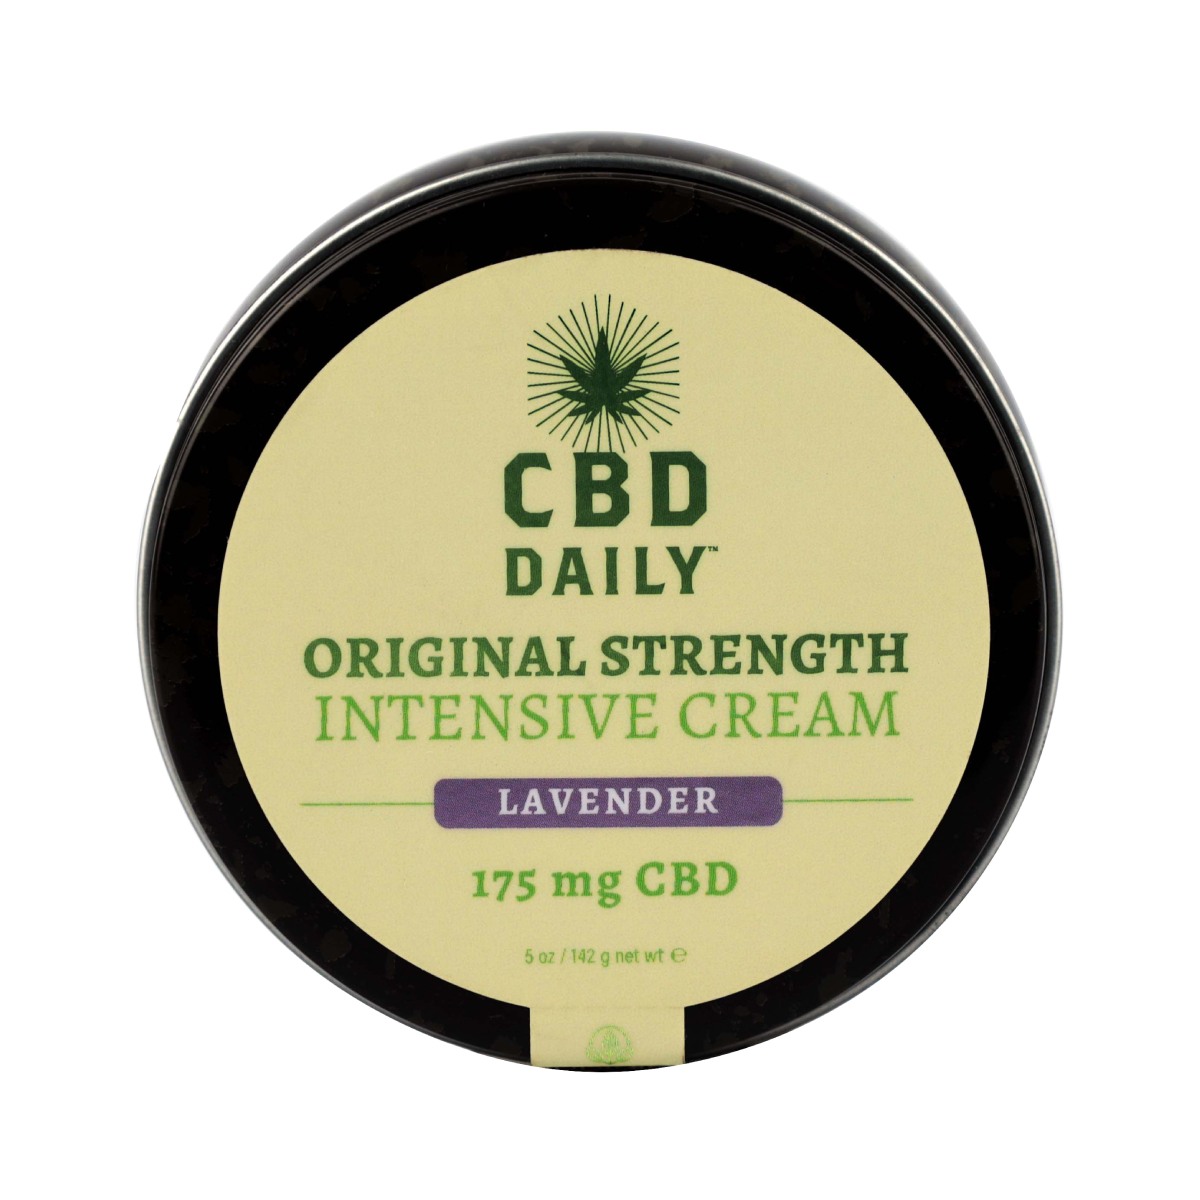 Original Strength Intensive Cream Grapefruit Mint Scent 5 oz | Shop Earthly Body